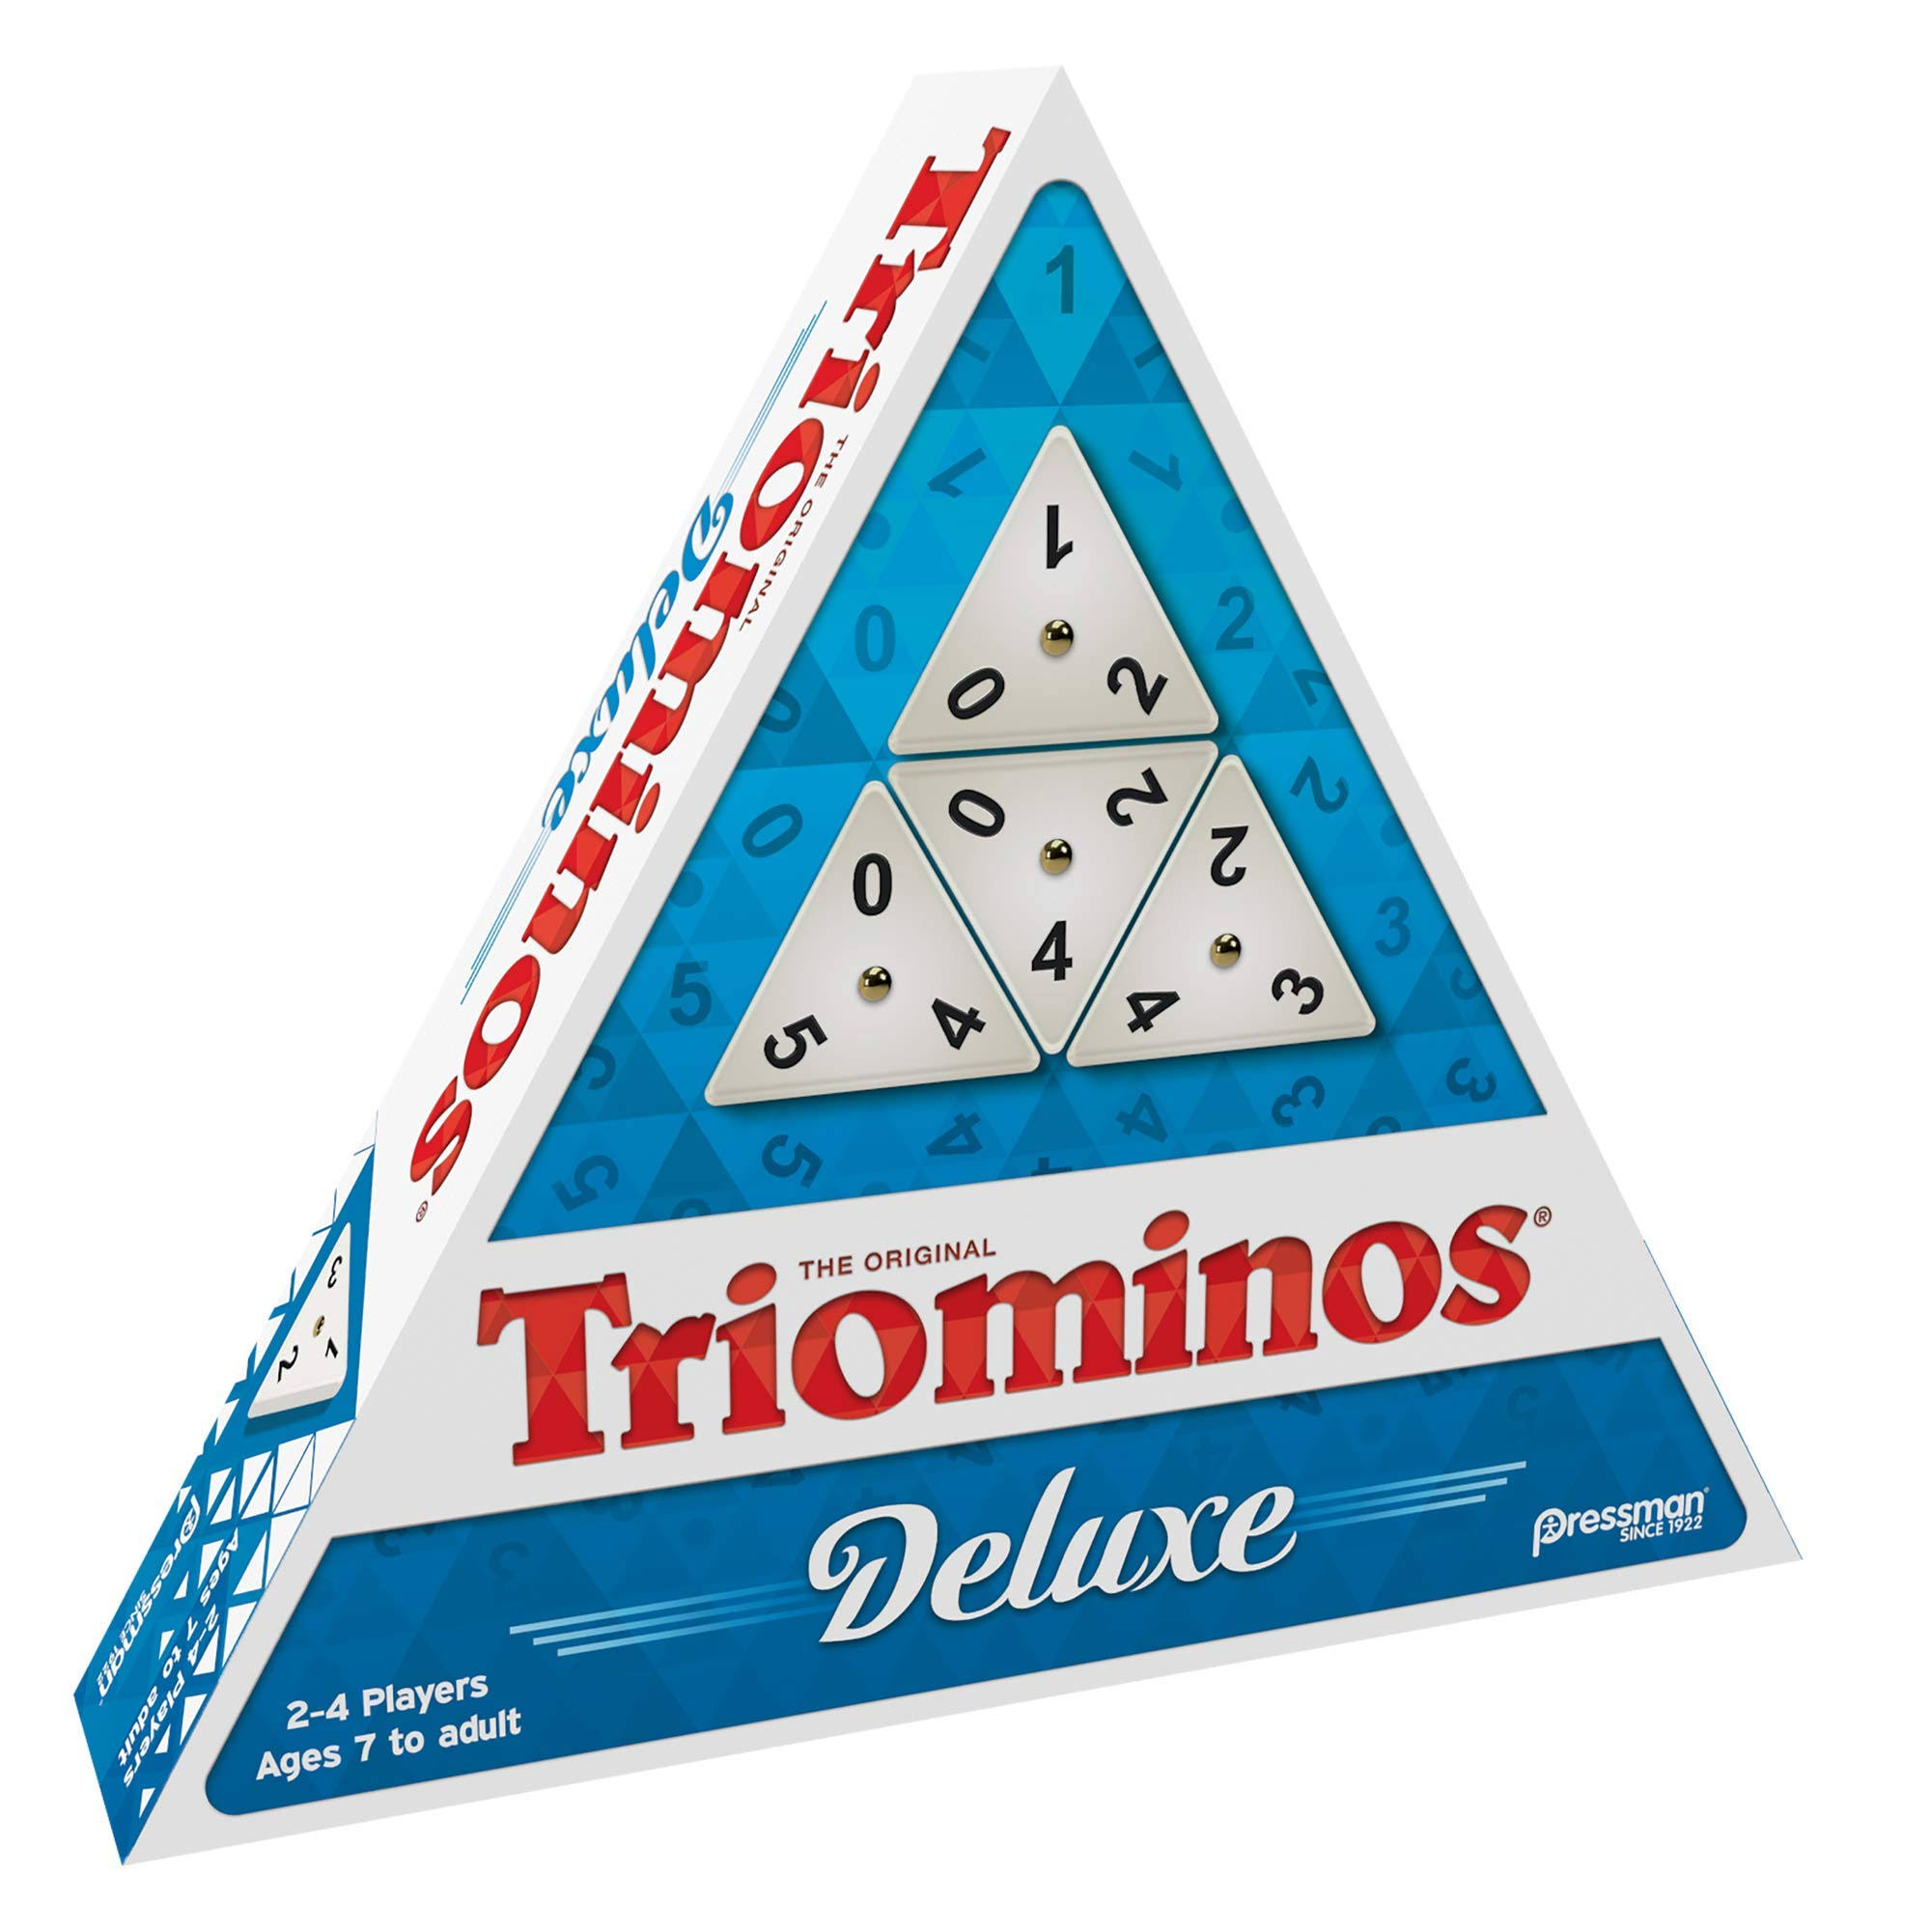 Pressman Toy Tri-ominos Game